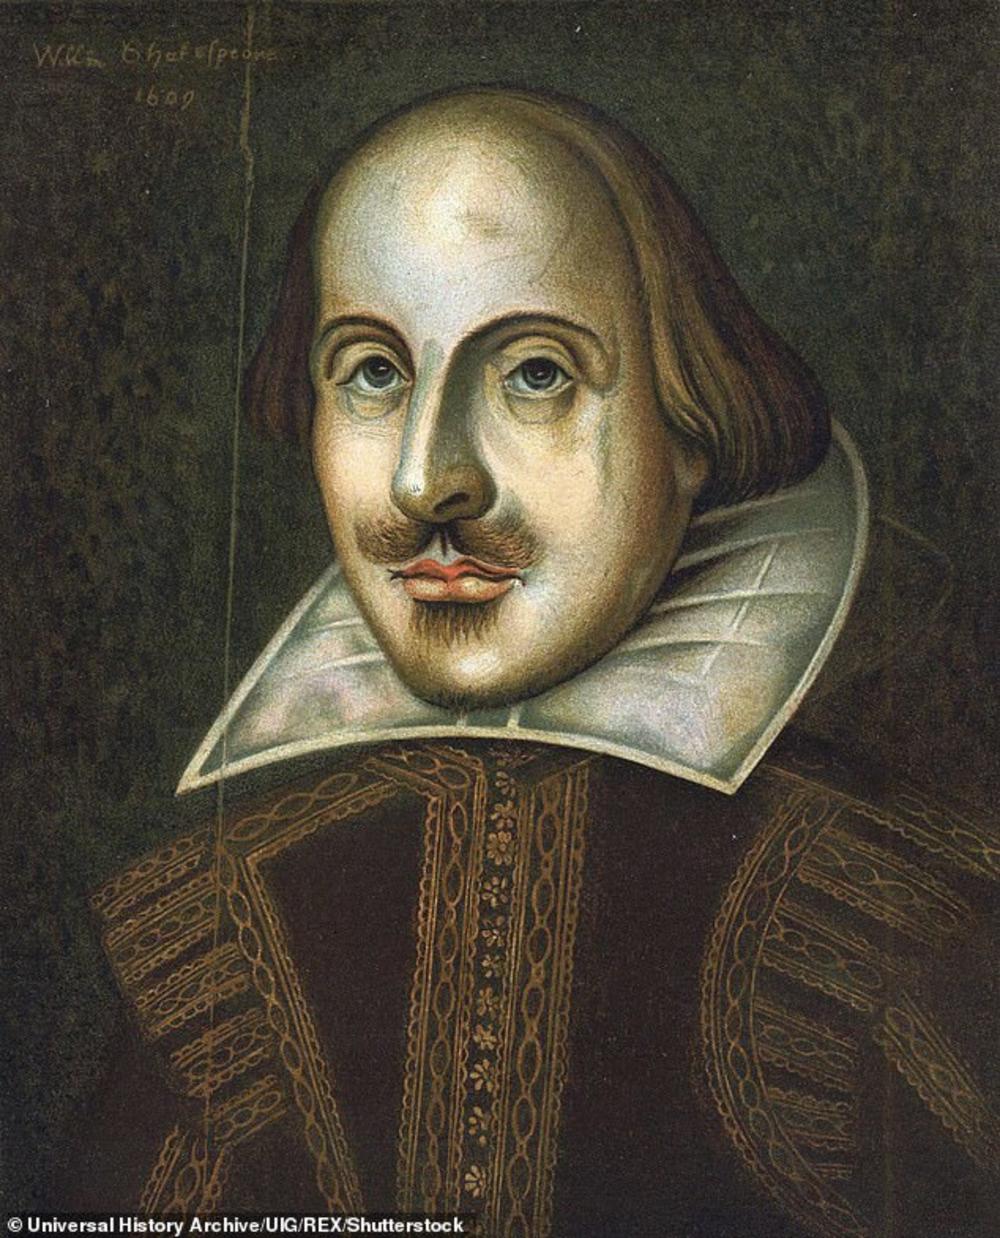 Vilijem Šekspir